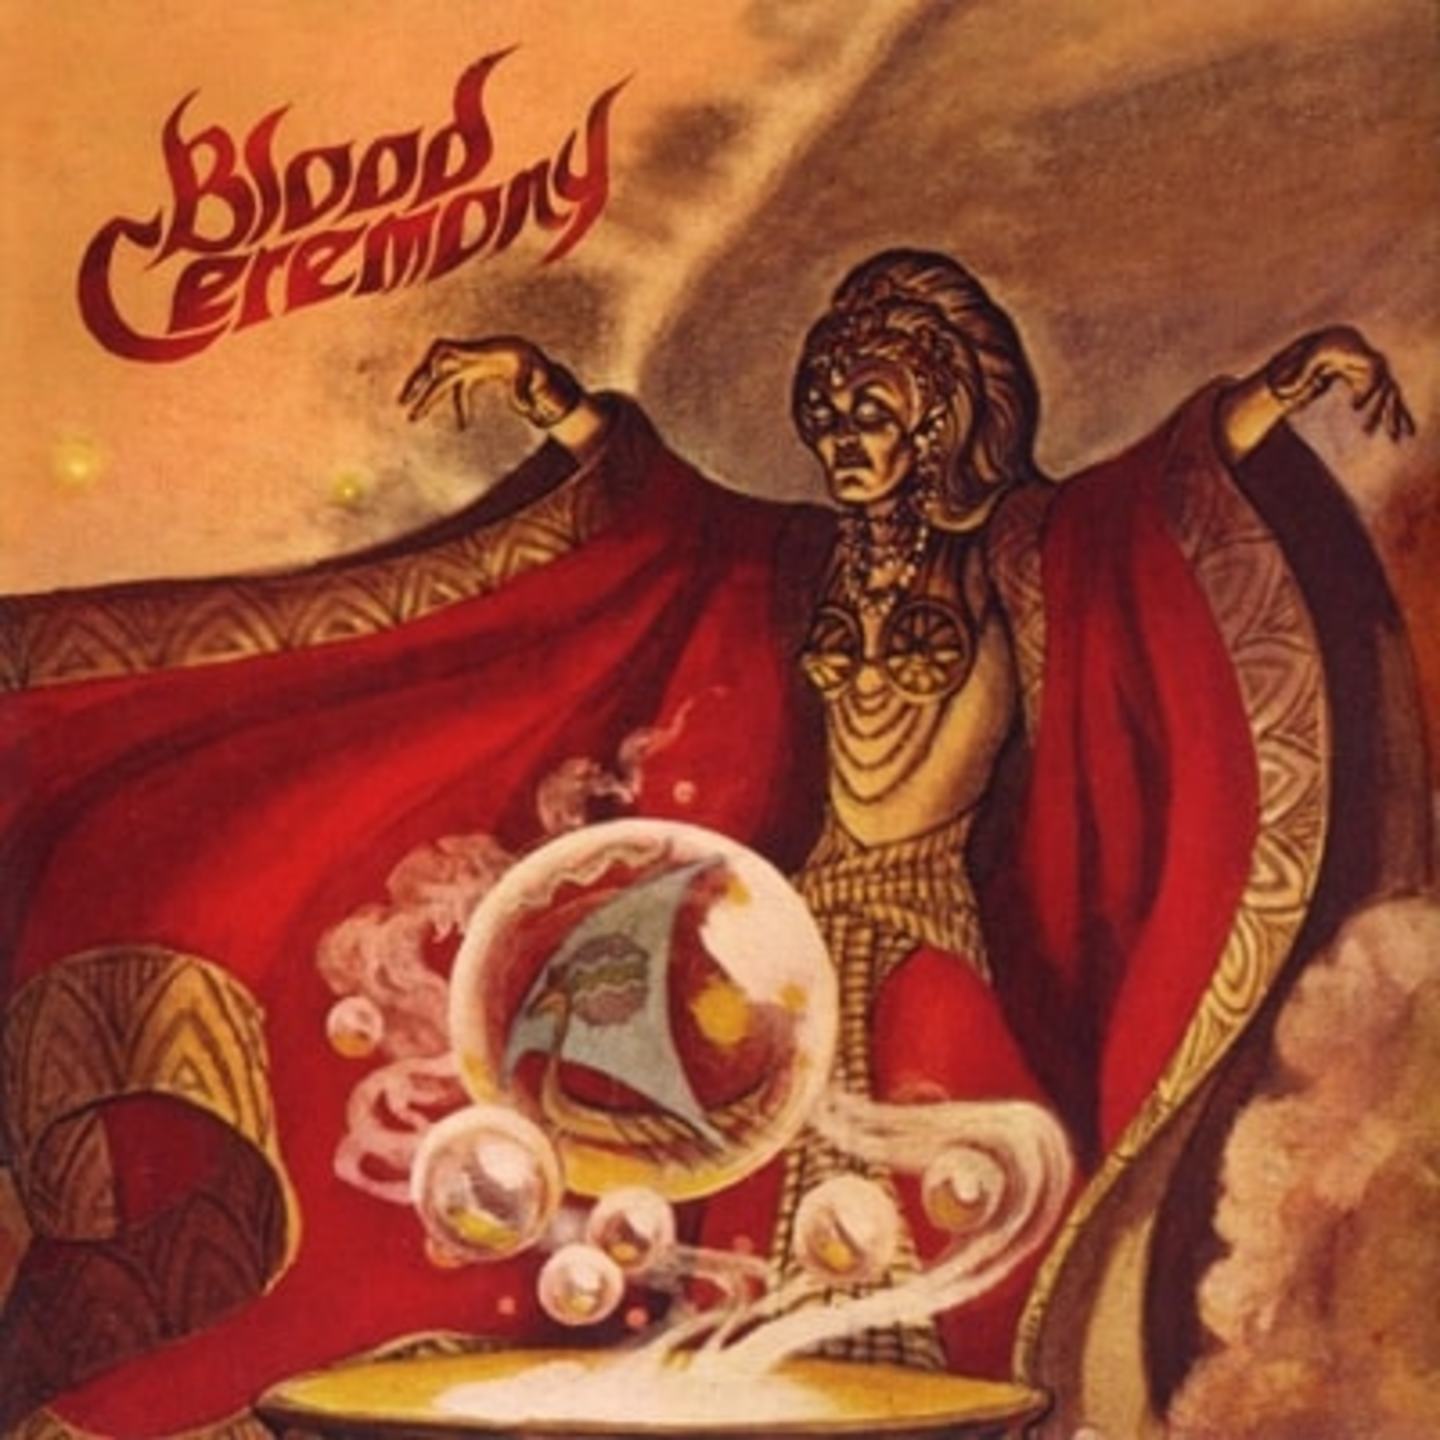 BLOOD CEREMONY - Blood Ceremony LP Gold Sparkle vinyl